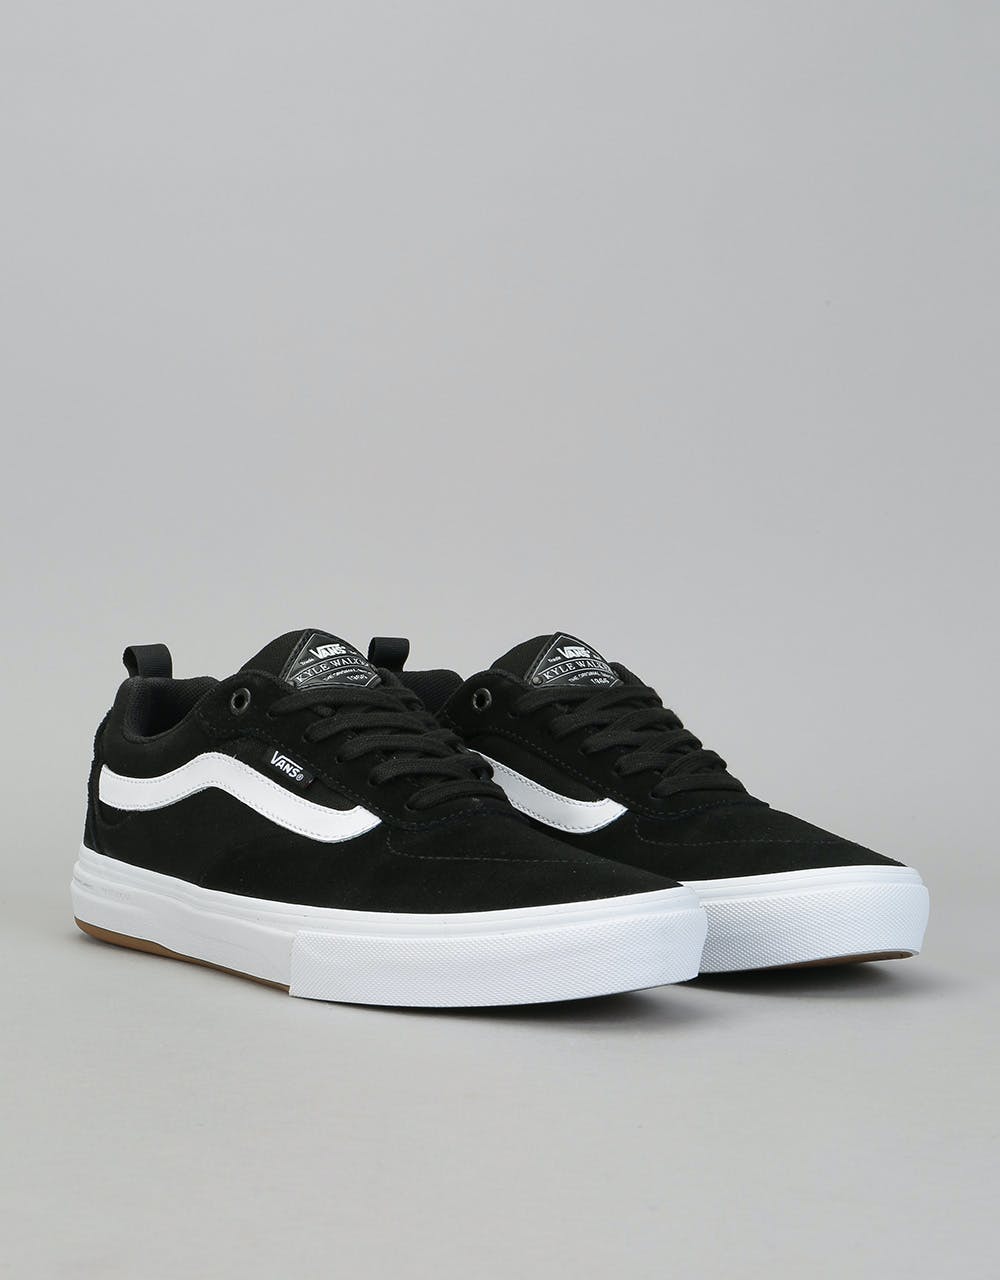 Vans Kyle Walker Pro Skate Shoes - Black/White